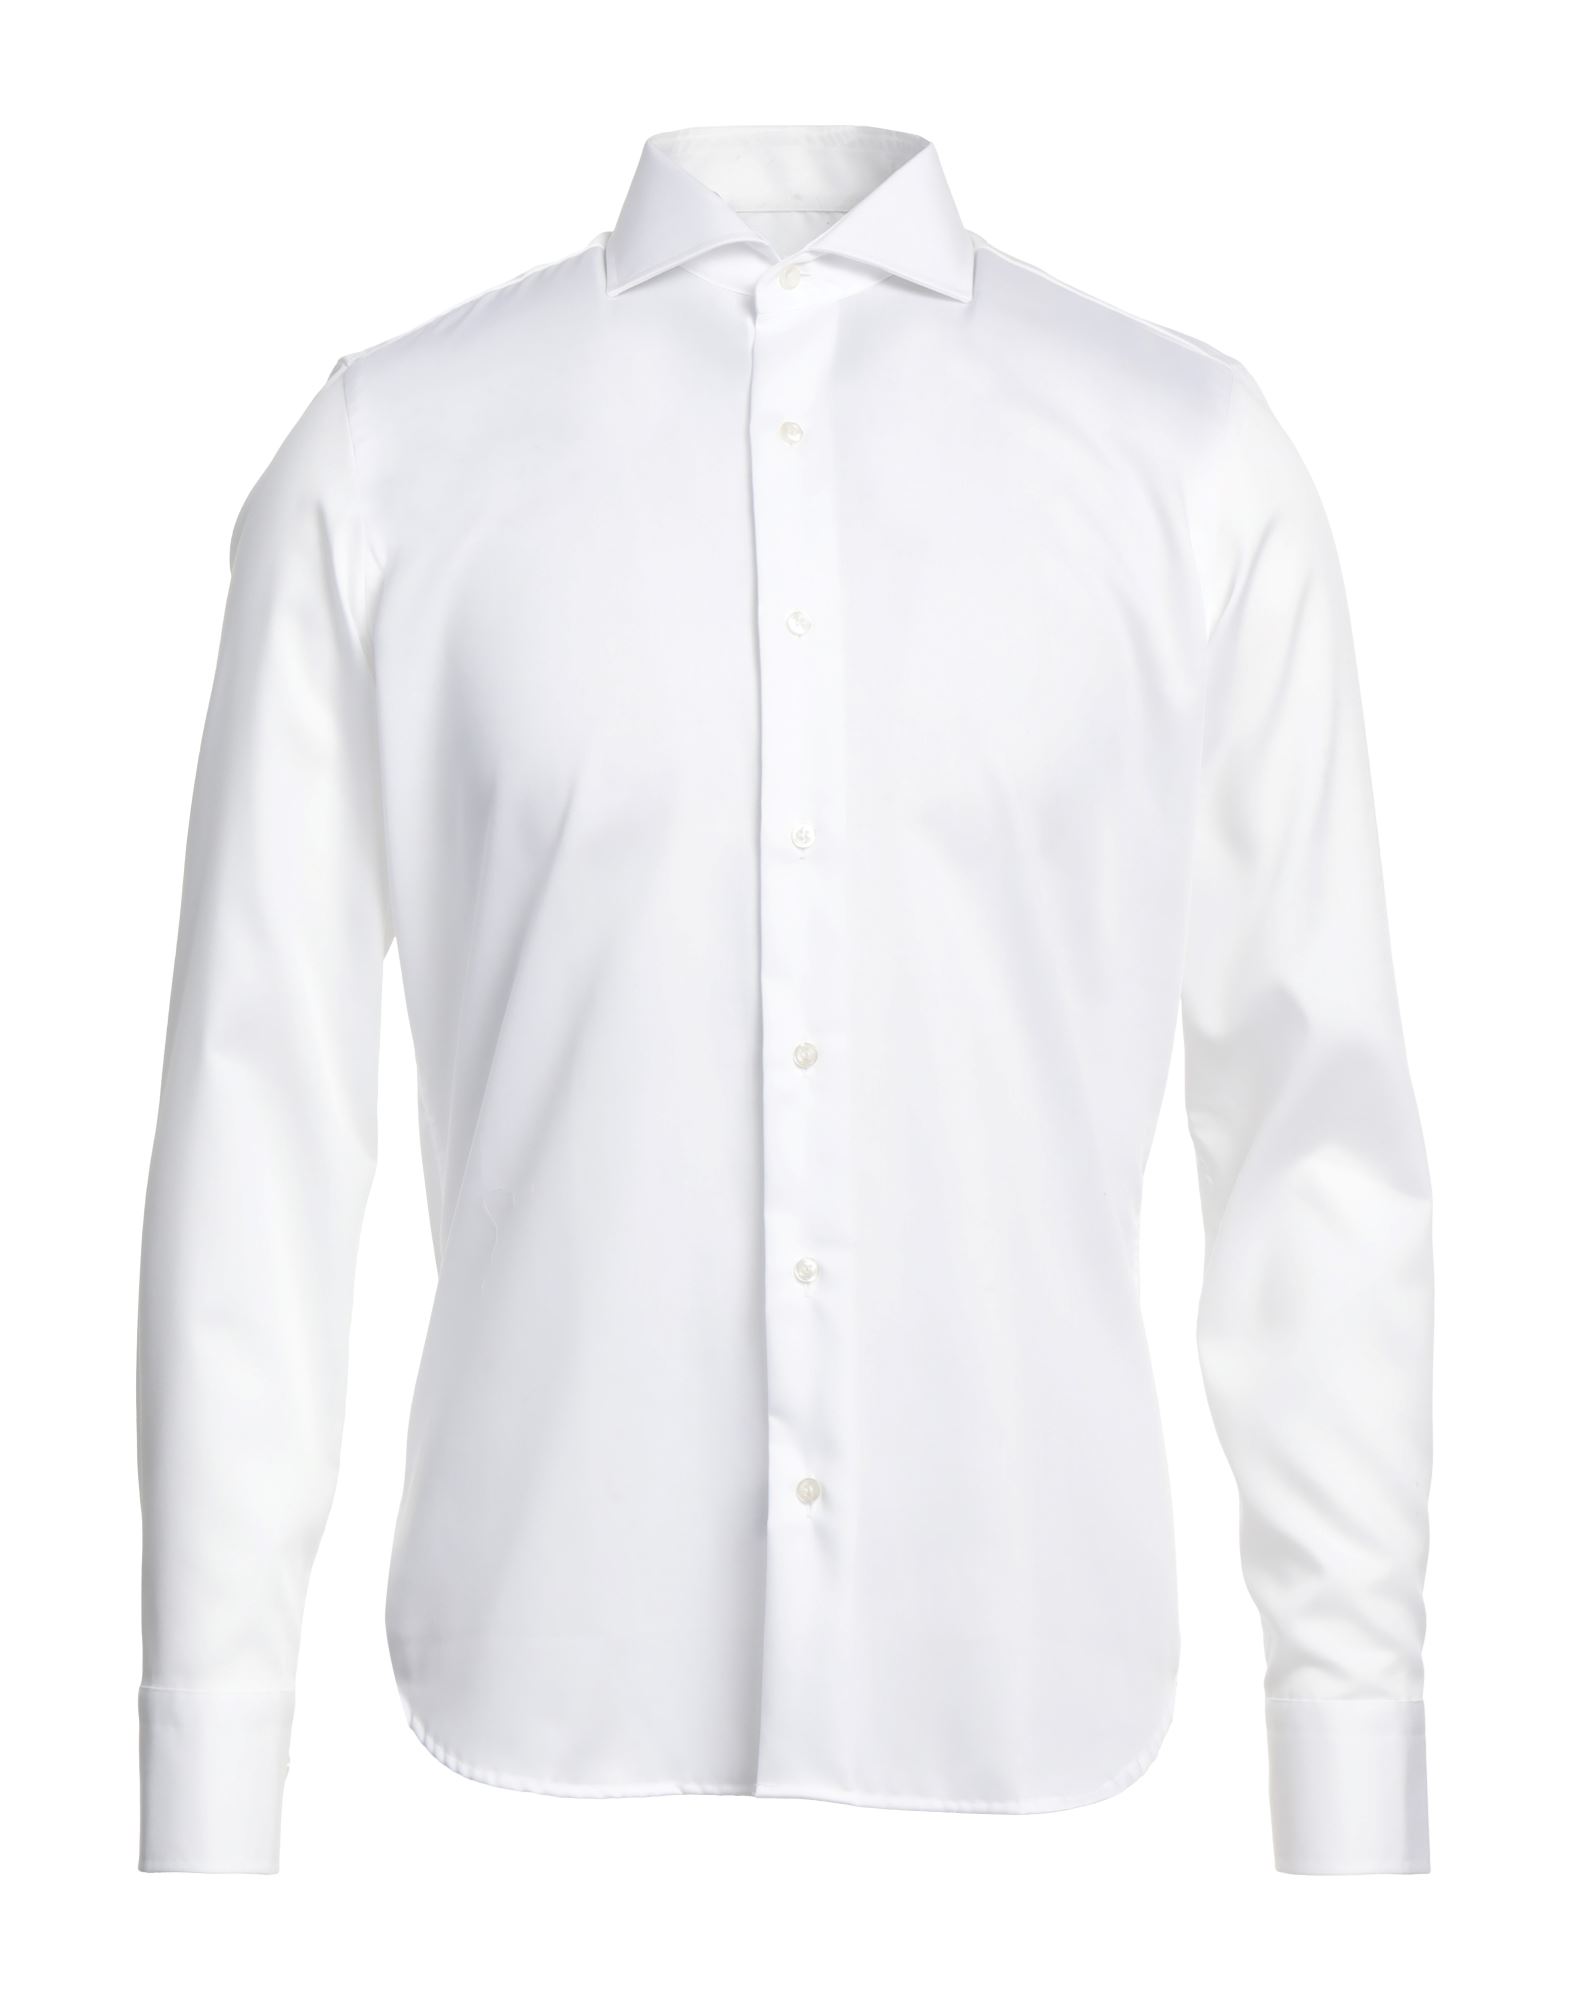 Alea Shirts In White